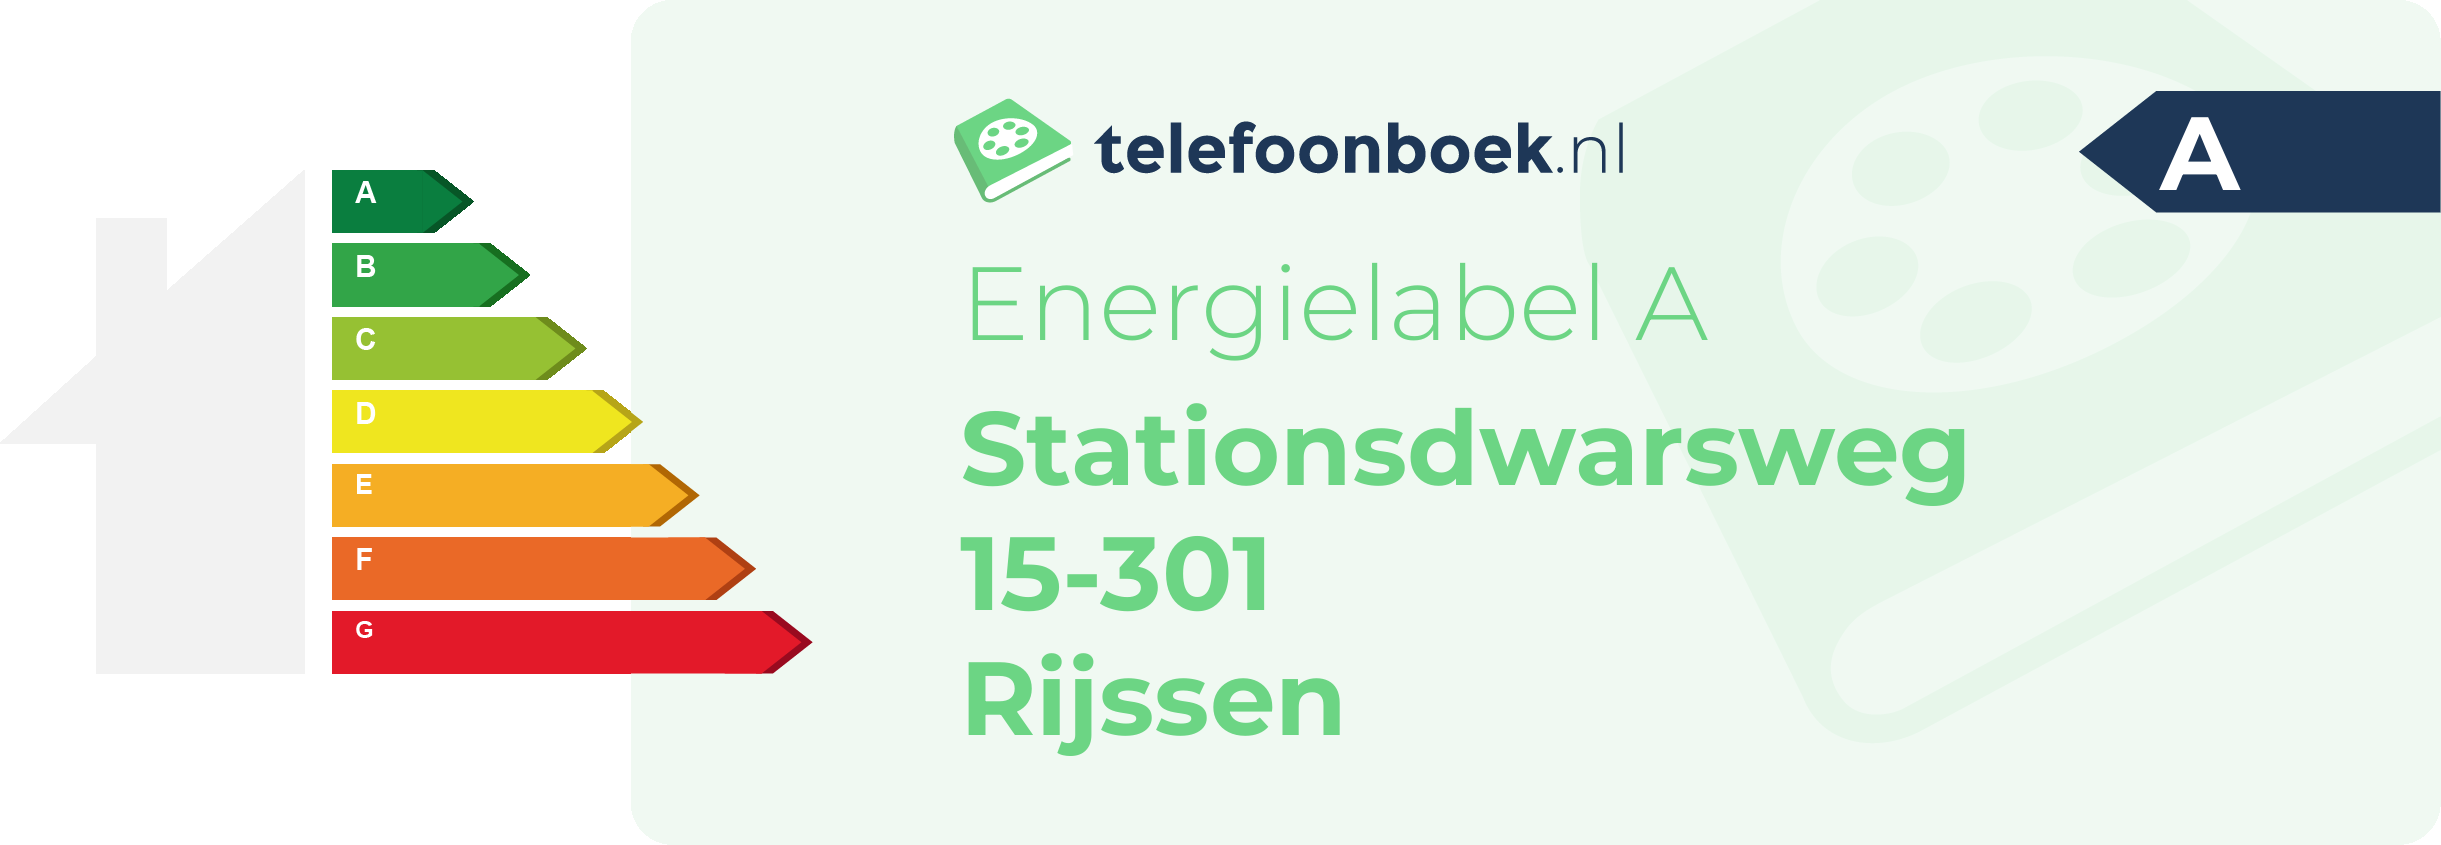 Energielabel Stationsdwarsweg 15-301 Rijssen